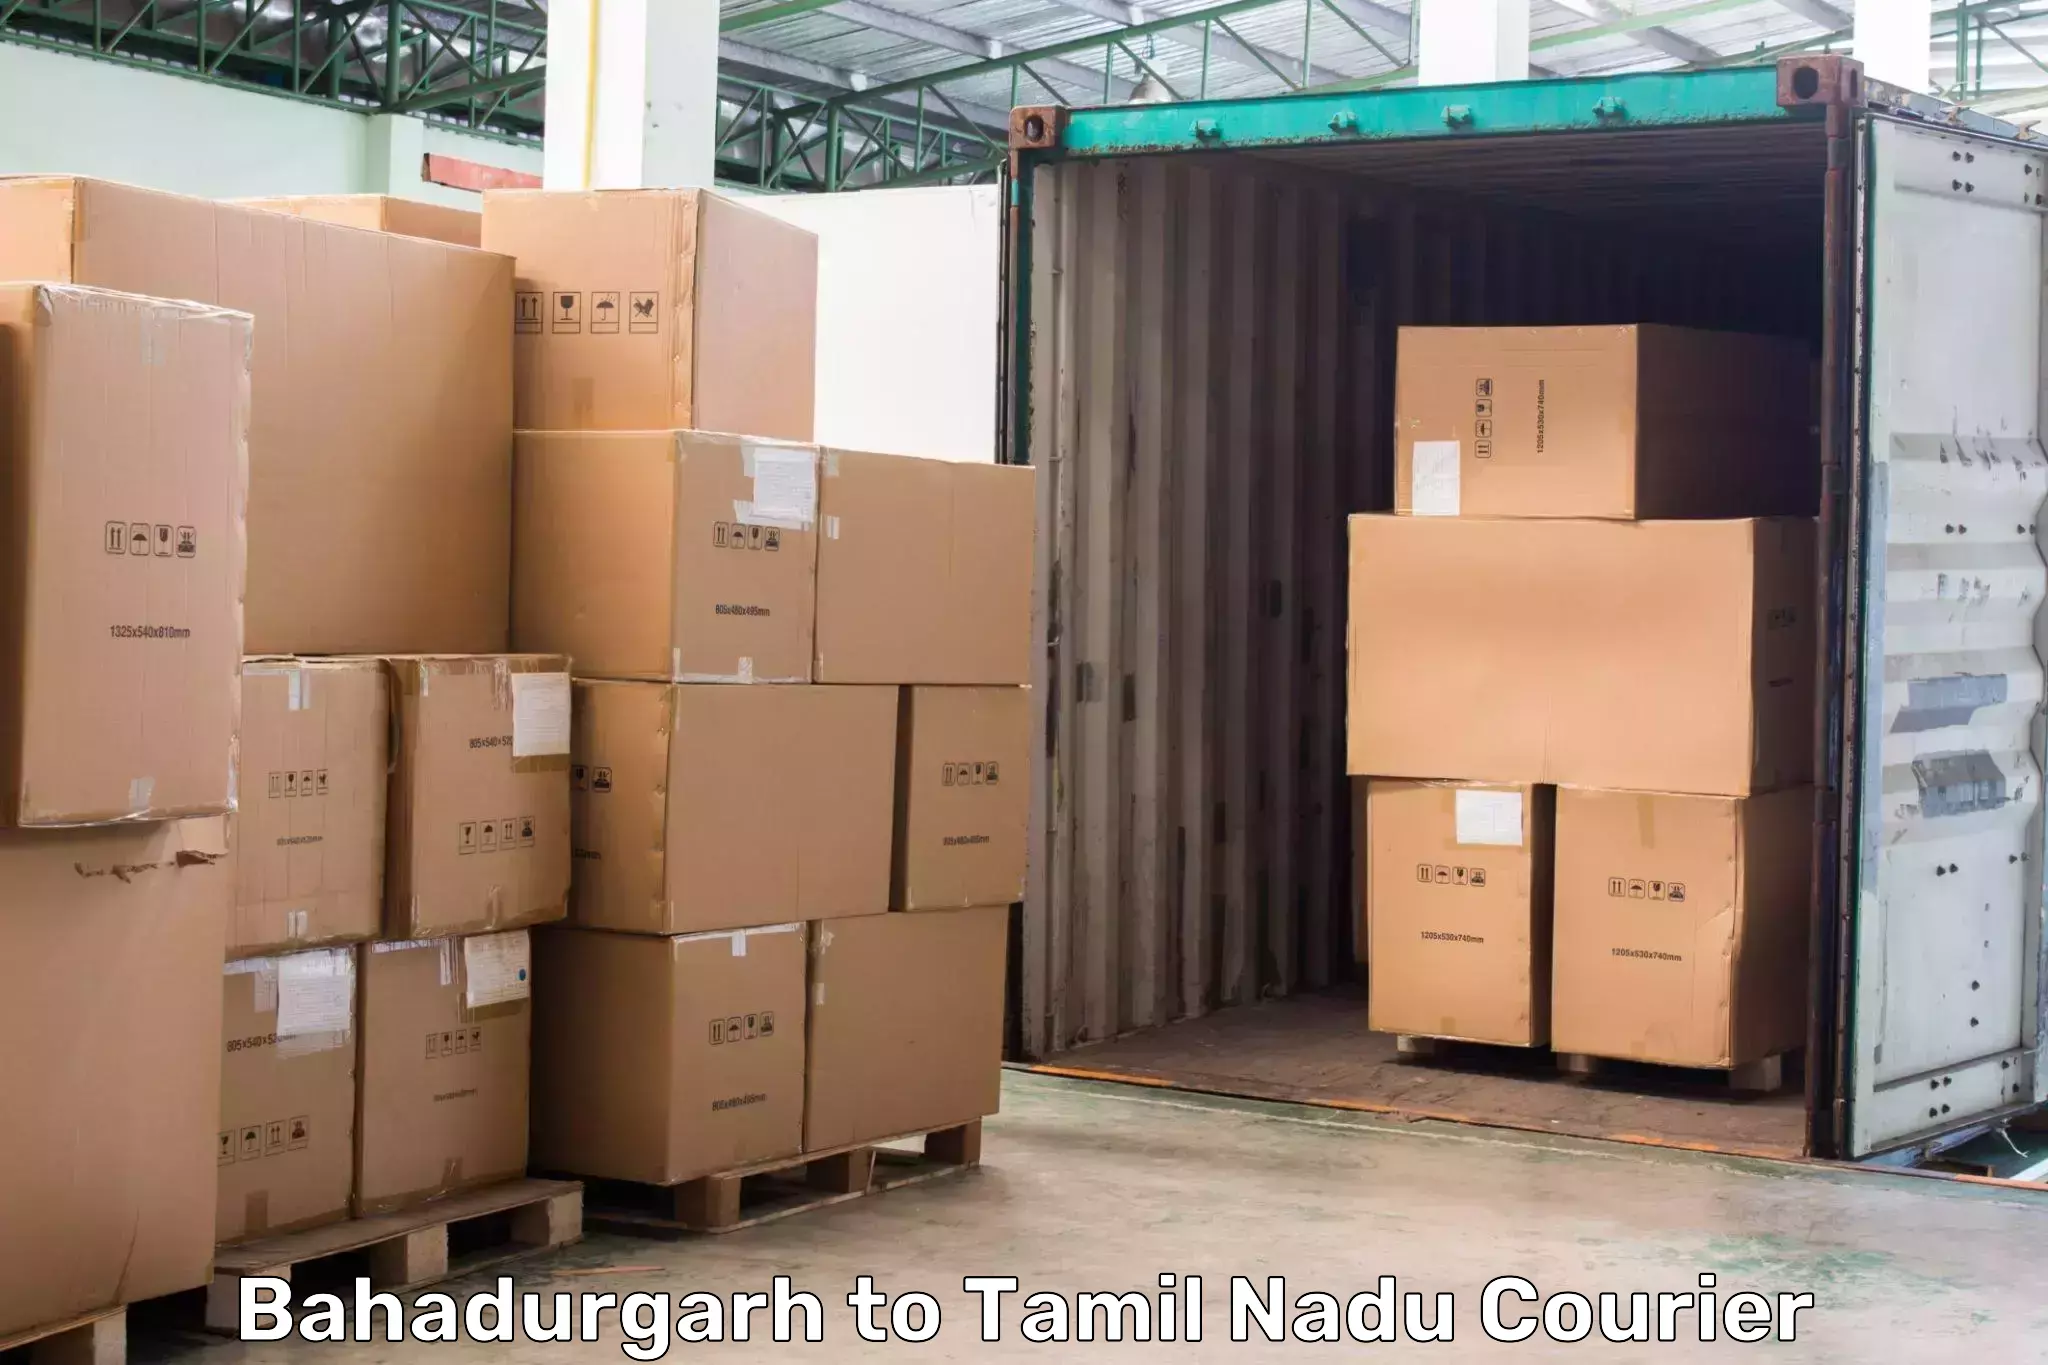 Tech-enabled shipping Bahadurgarh to Valparai